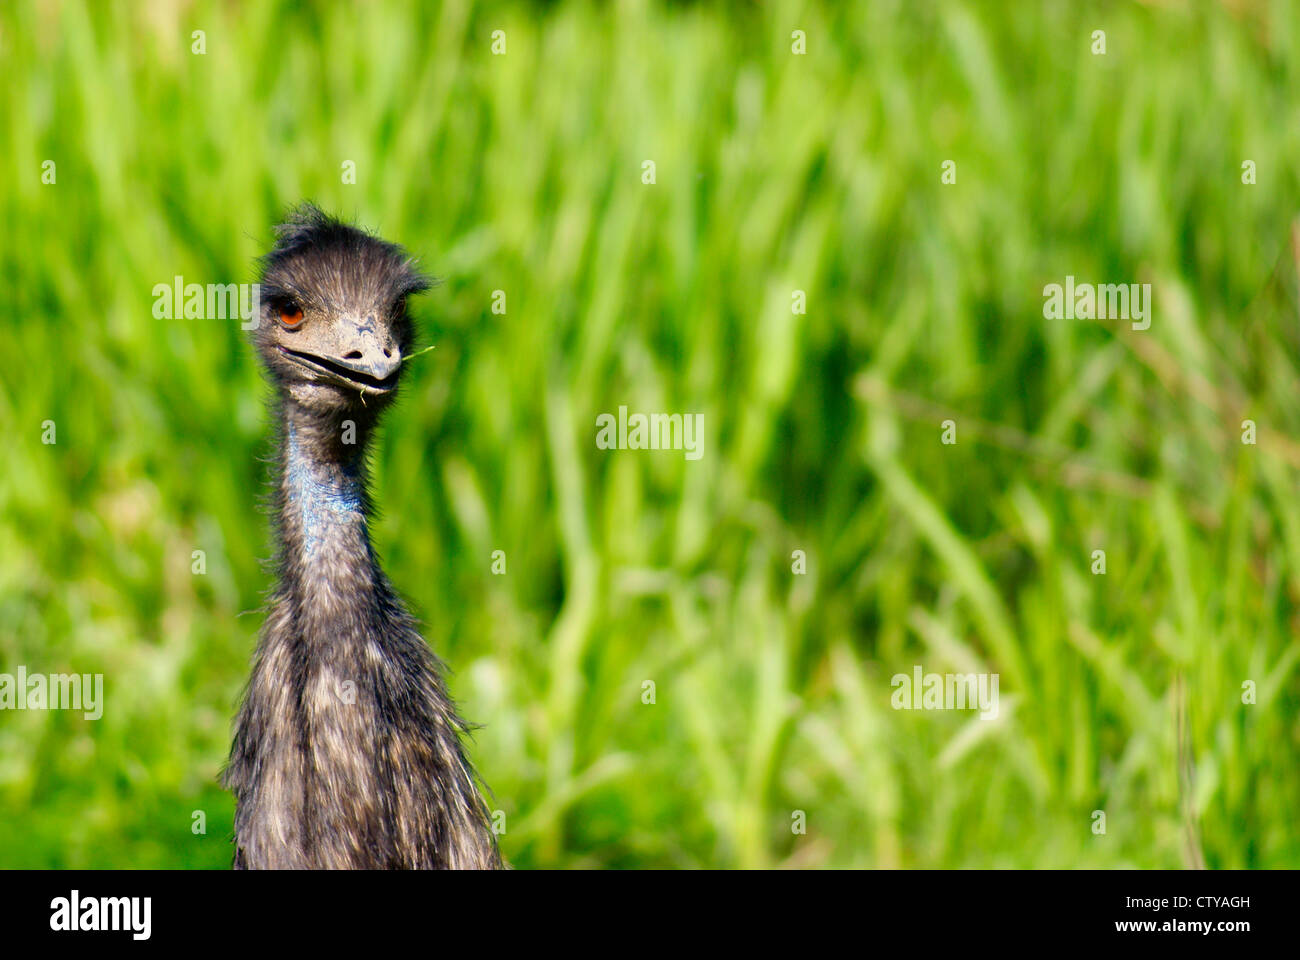 Emu (Dromaius novaehollandiae) portrait / head shot in grasslands with single blade in smiley face beak Stock Photo